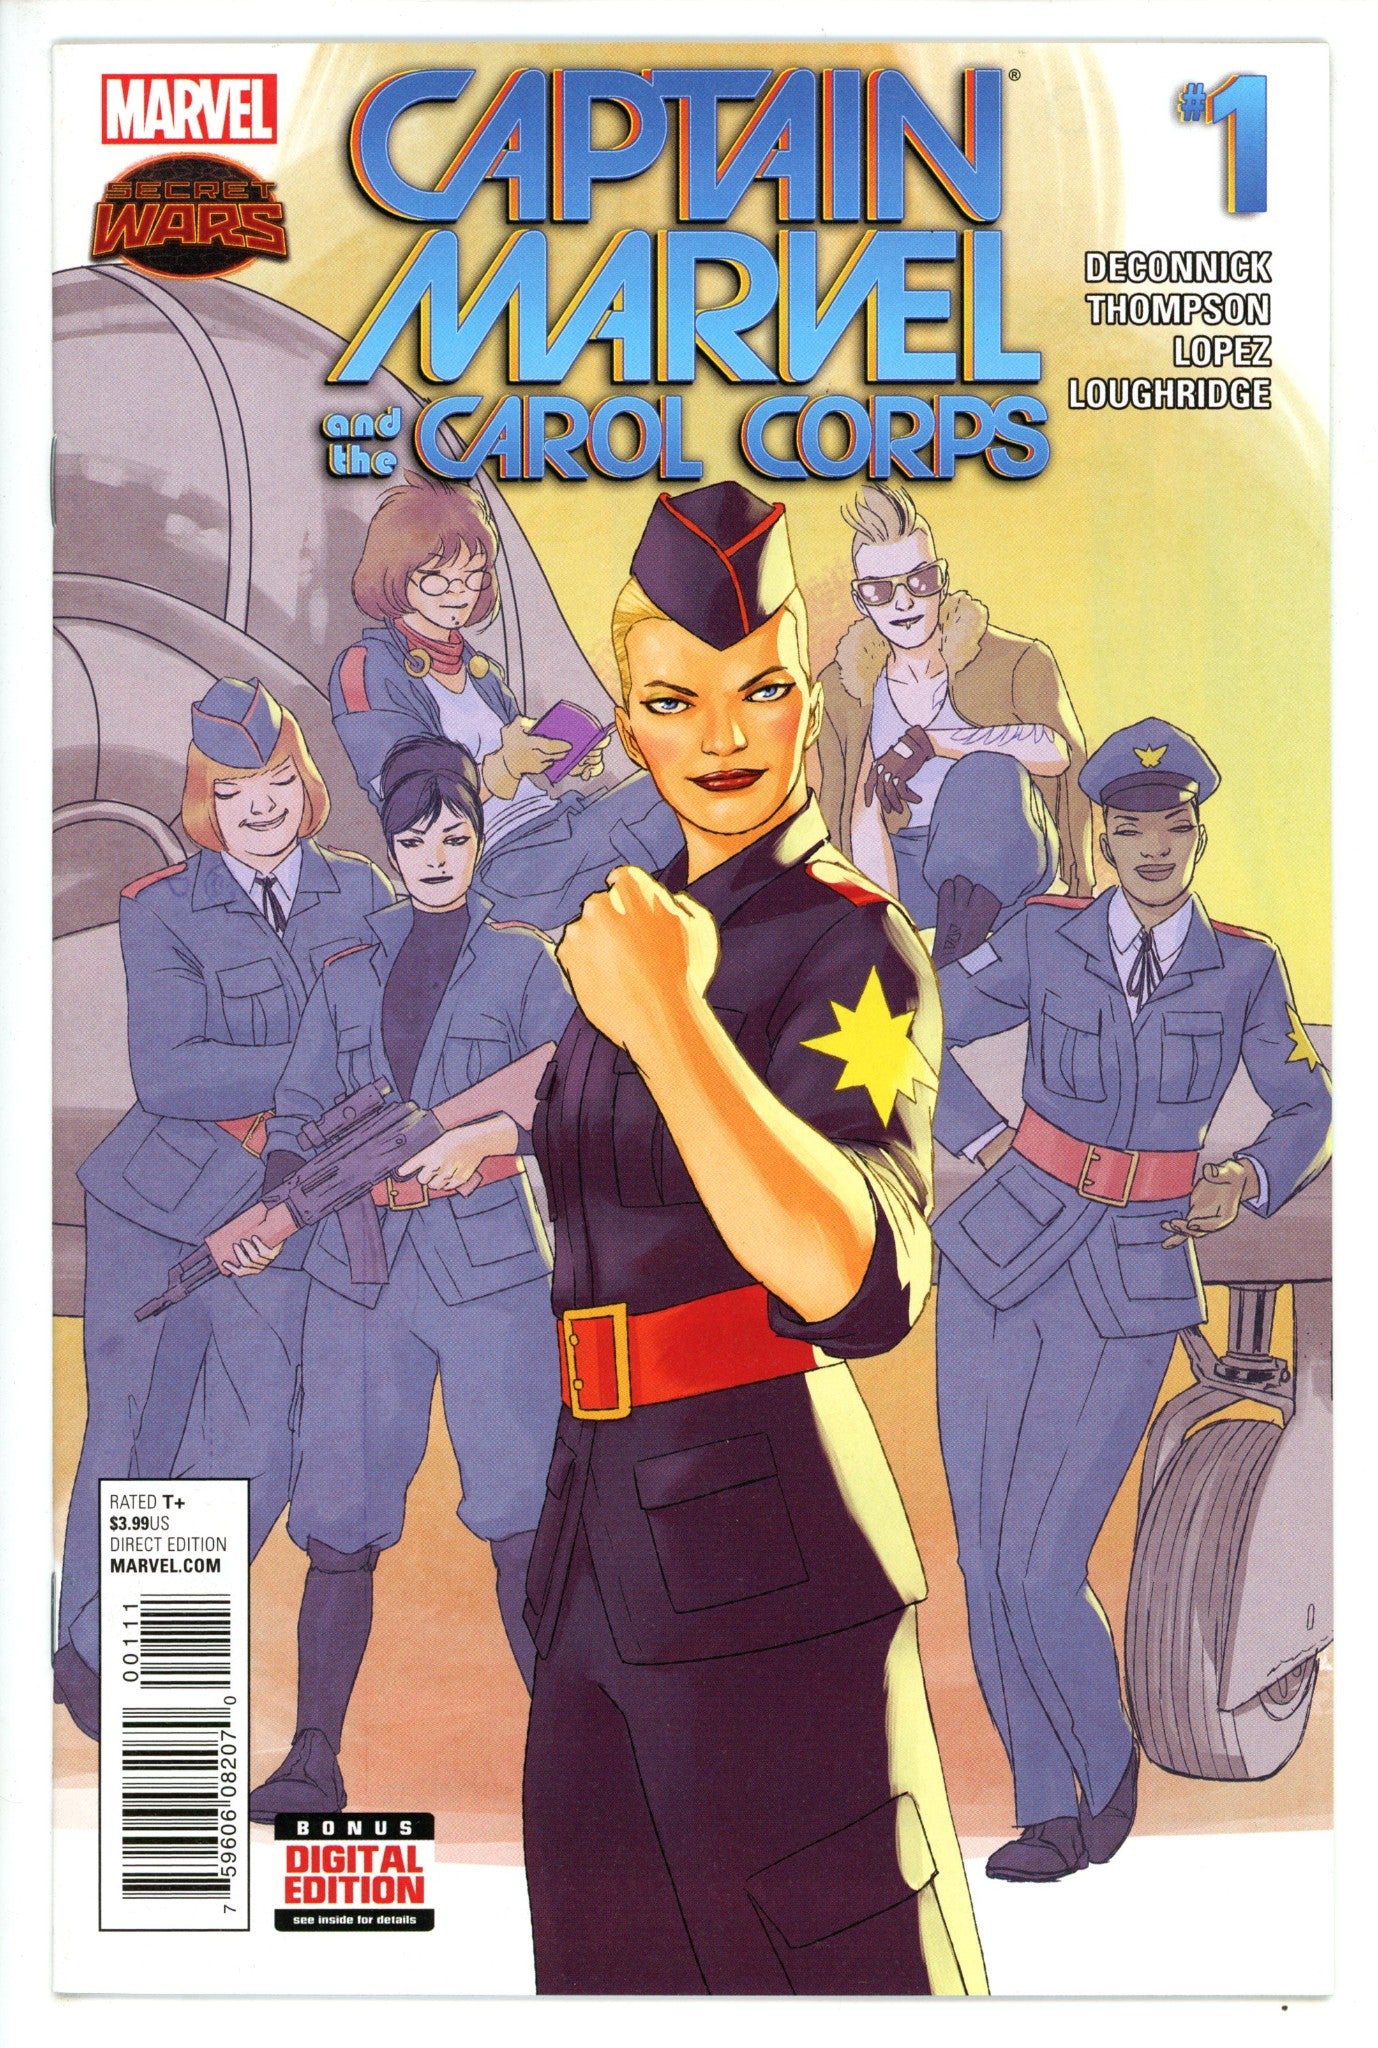 Captain Marvel & the Carol Corps 1